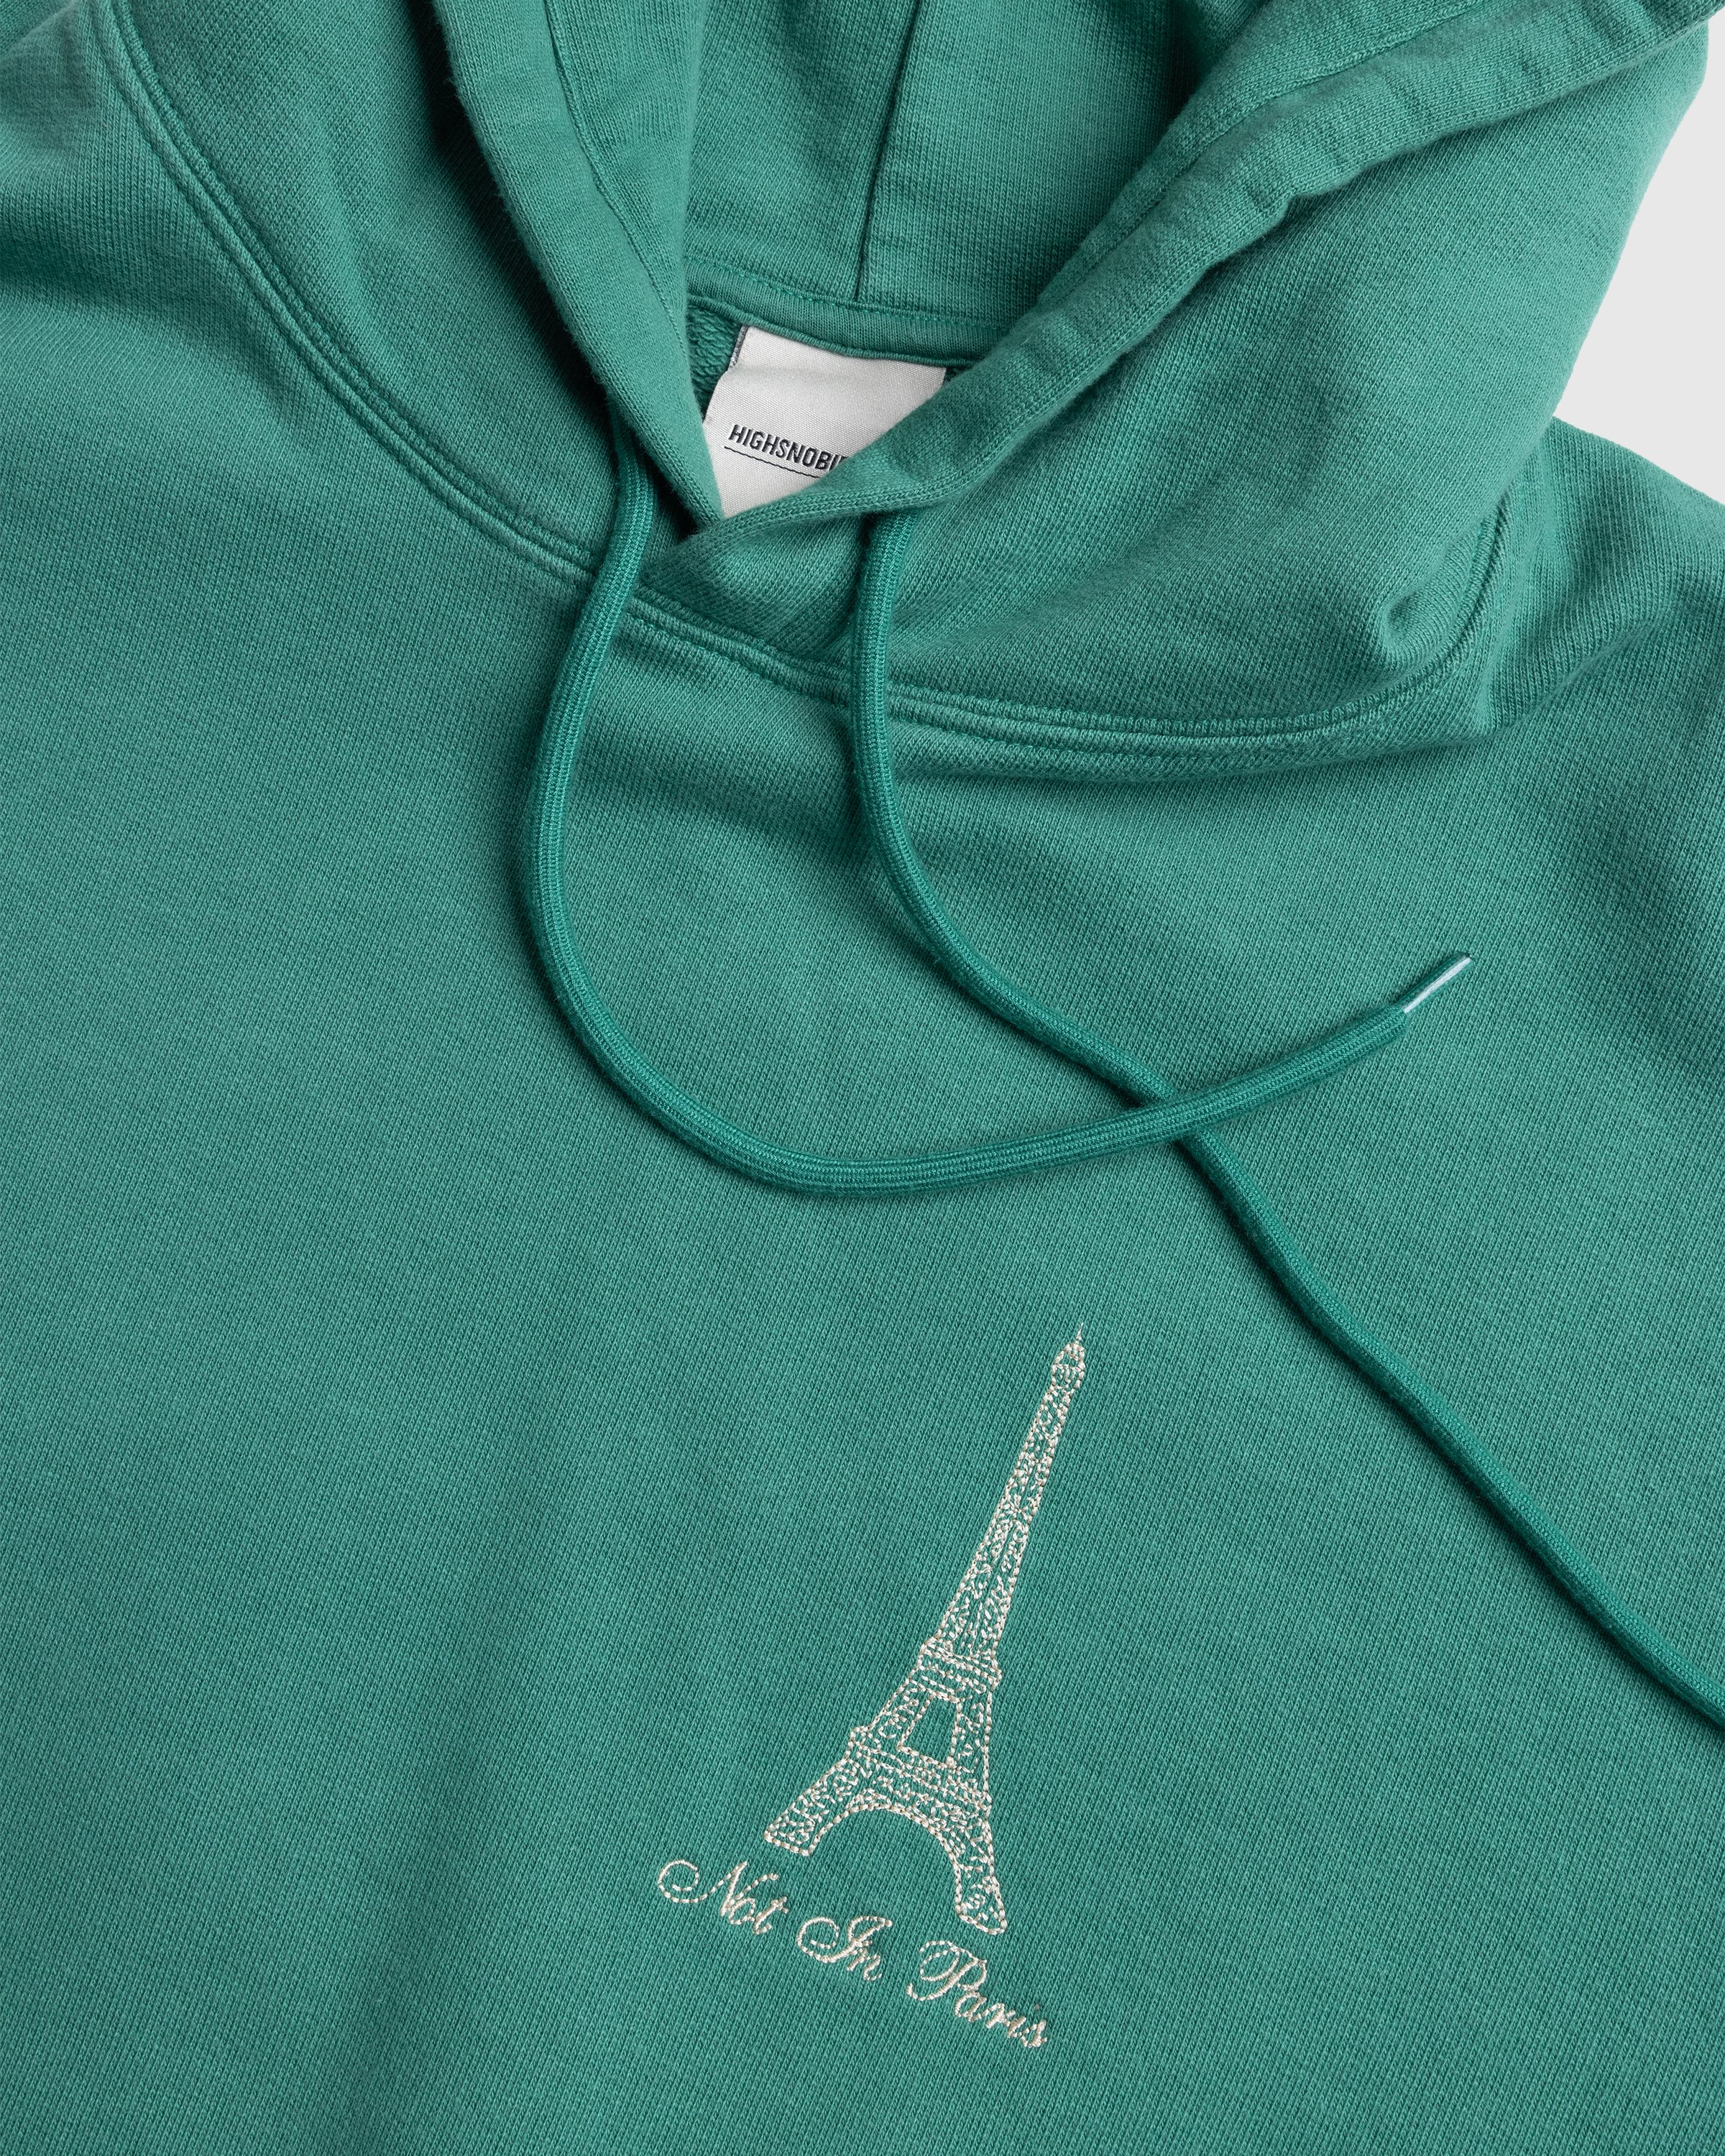 Highsnobiety - Not in Paris 5 Hoodie Green - Clothing - Green - Image 7